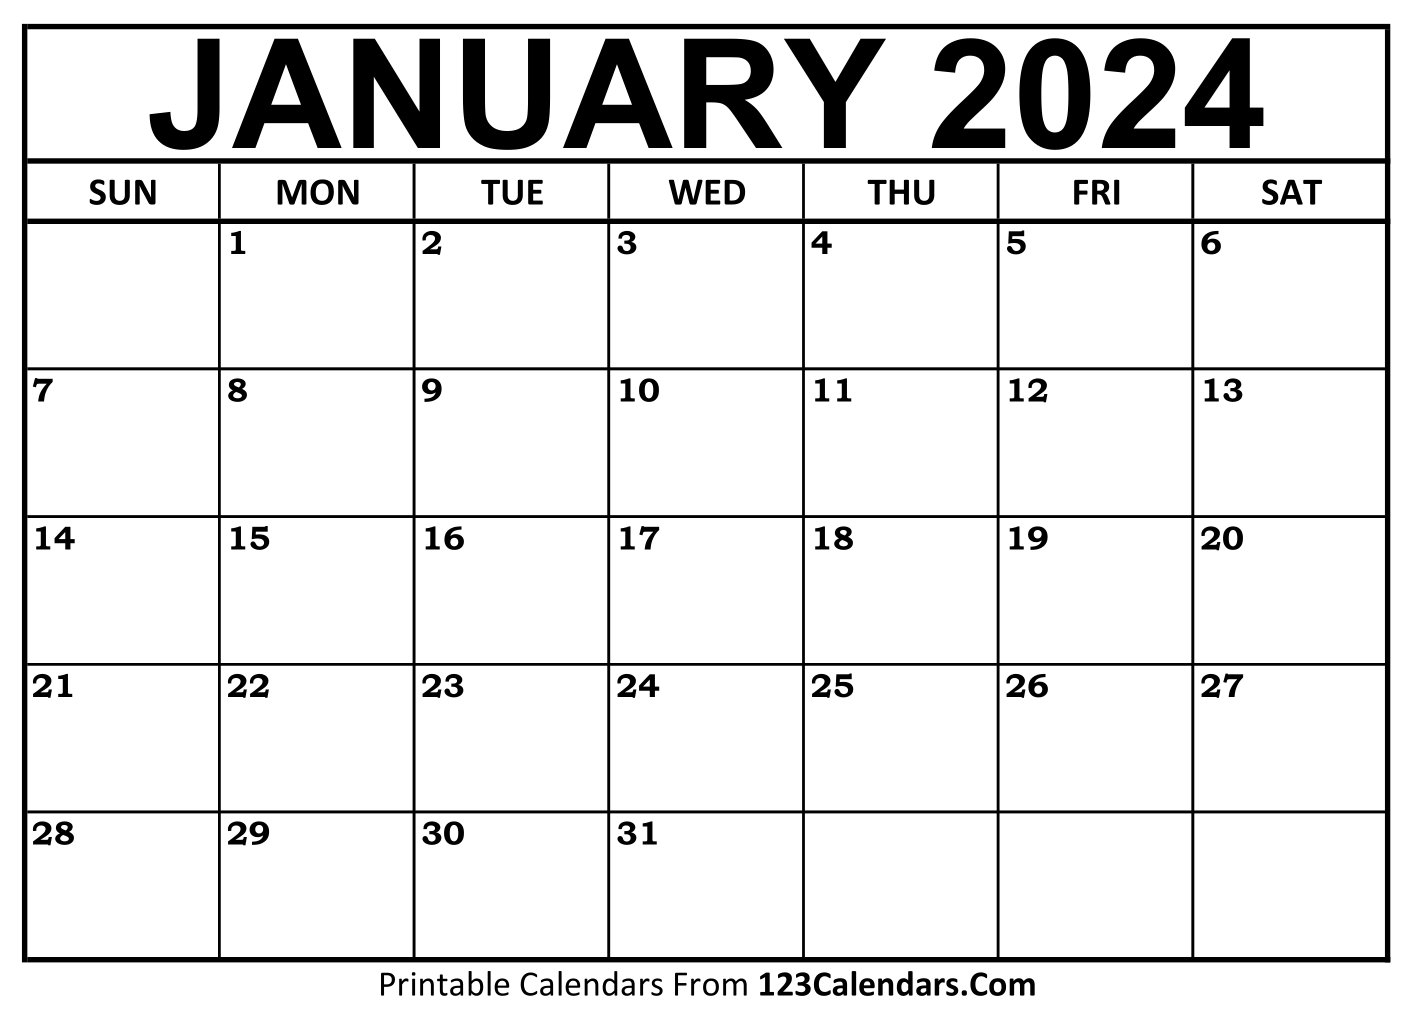 Printable January 2024 Calendar Templates - 123Calendars for Blank Calendar Template January 2024 Printable